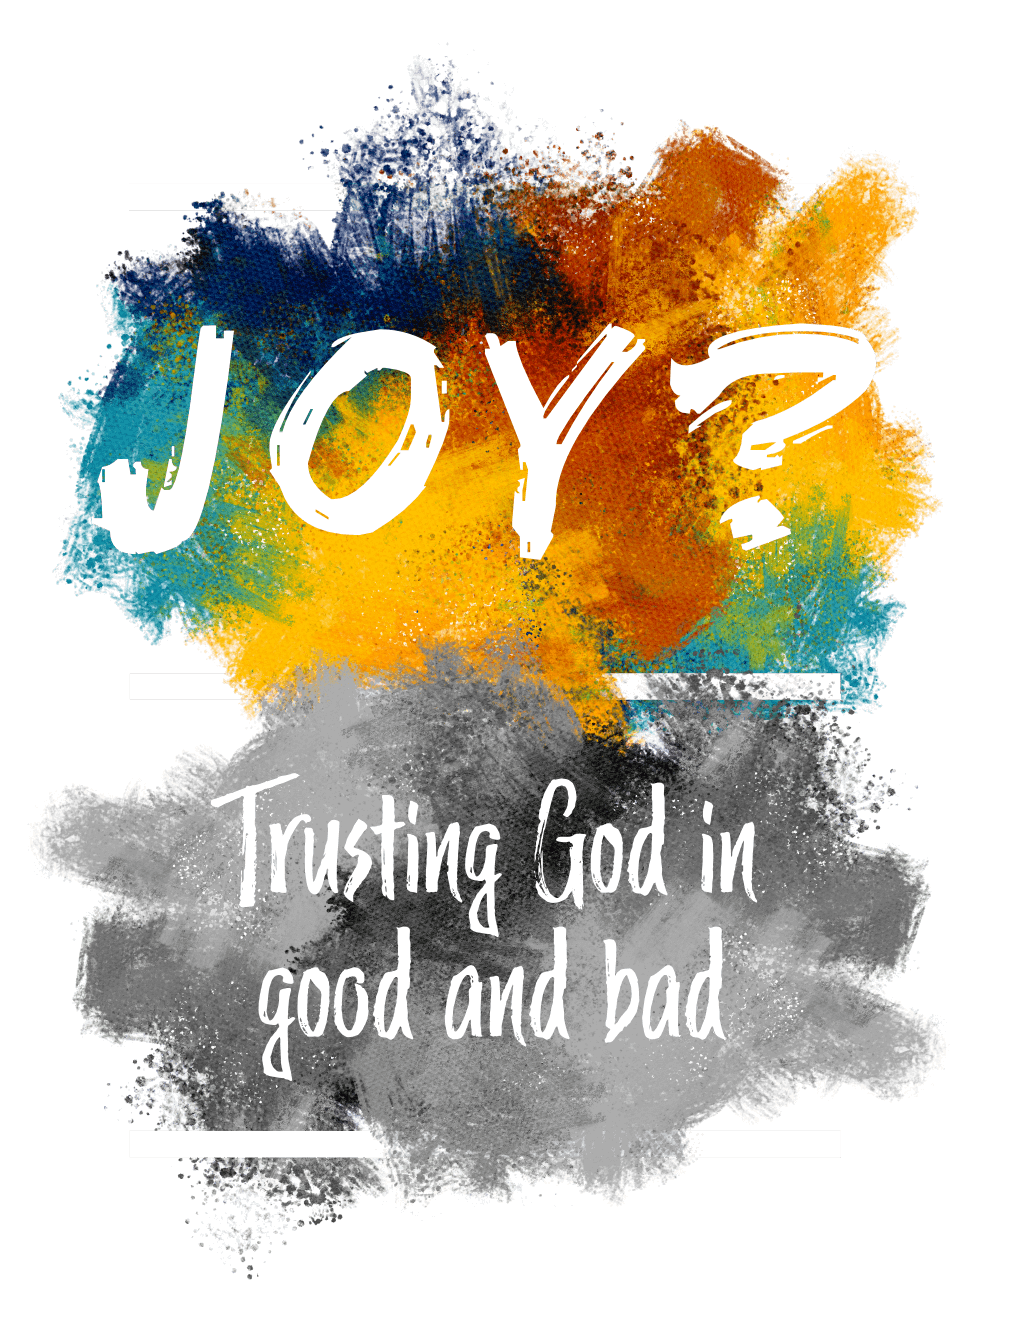 Joy? Trusting God in good and bad